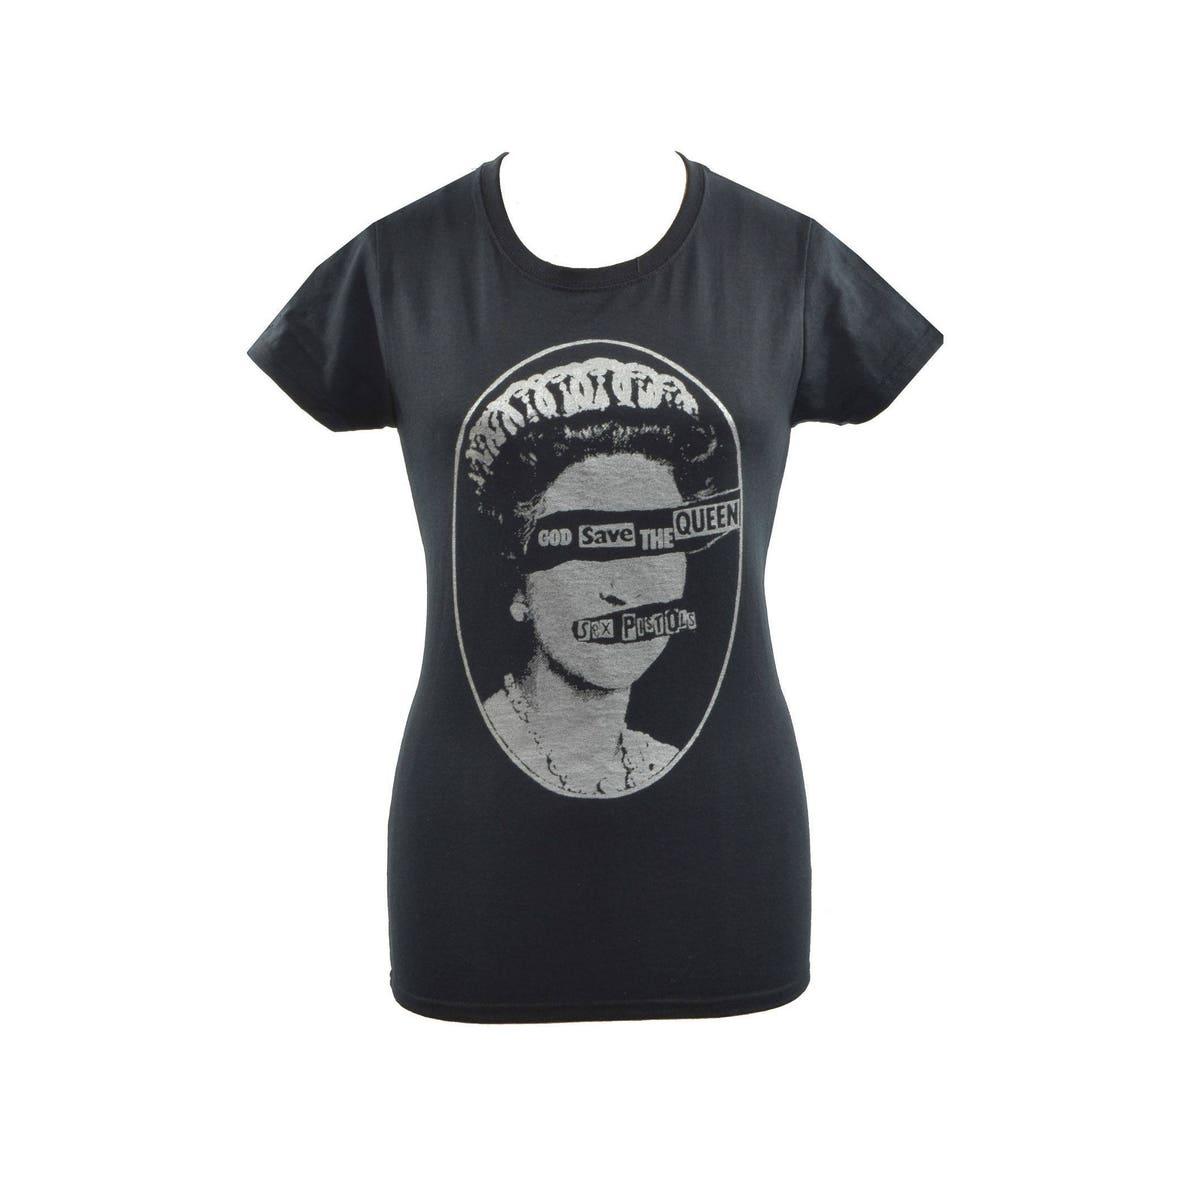 Sex Pistols God Save The Queen Unisex T-shirt Punk Rock Fans Gifts